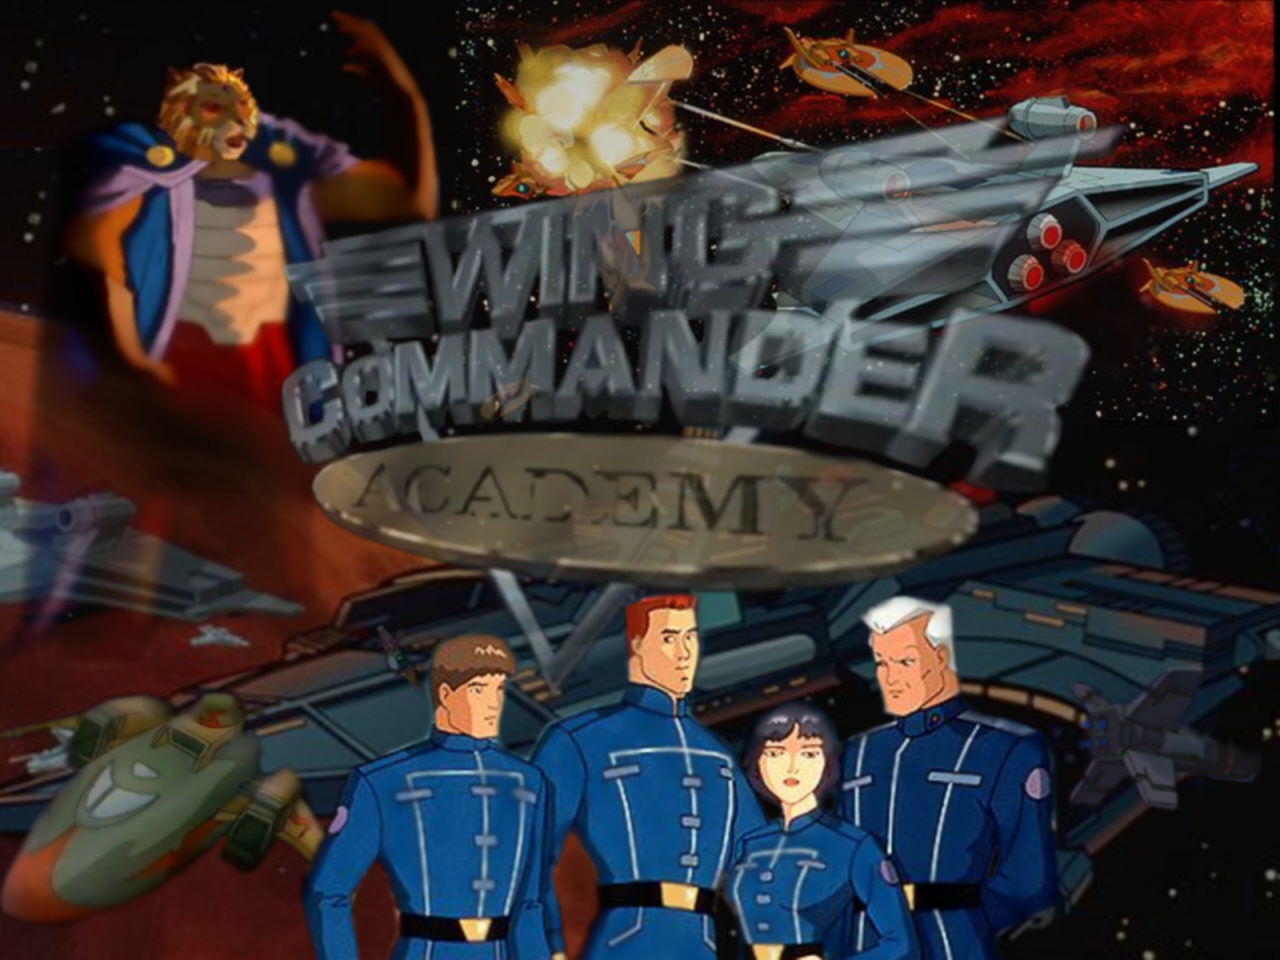 Academy Image Fills Wallpaper Gap - Wing Commander CIC